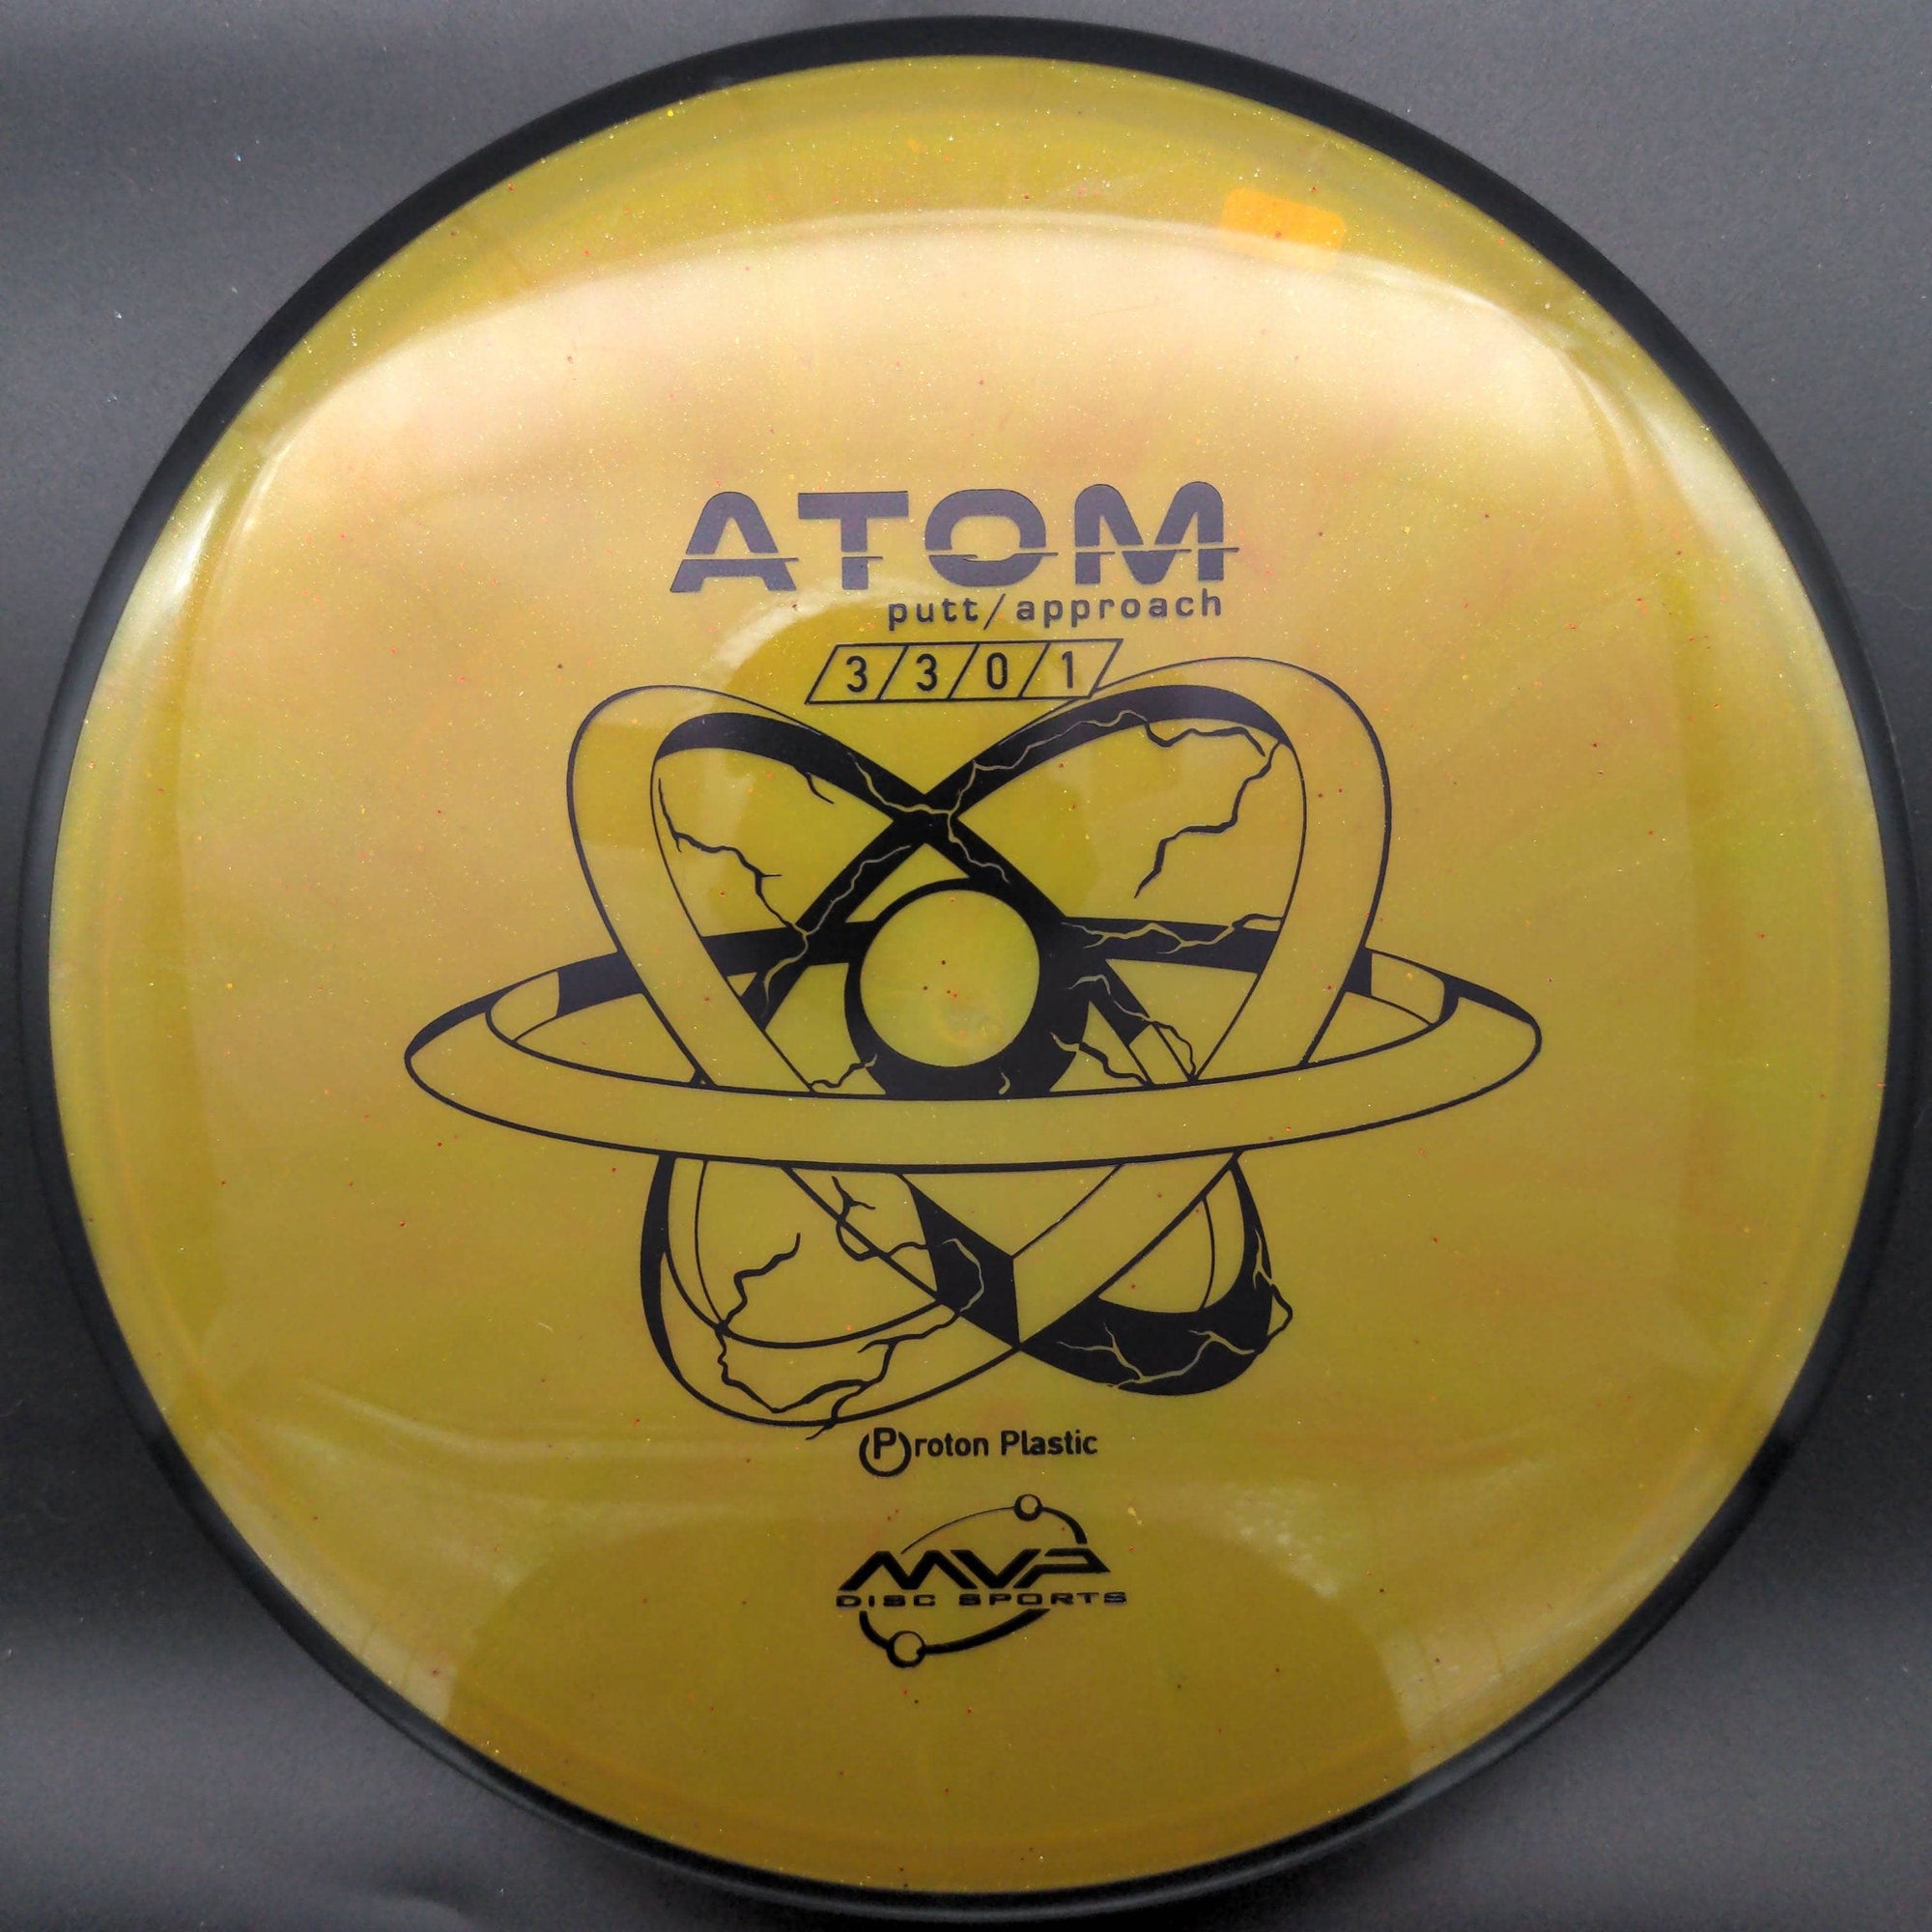 MVP Putter Atom, Proton Plastic